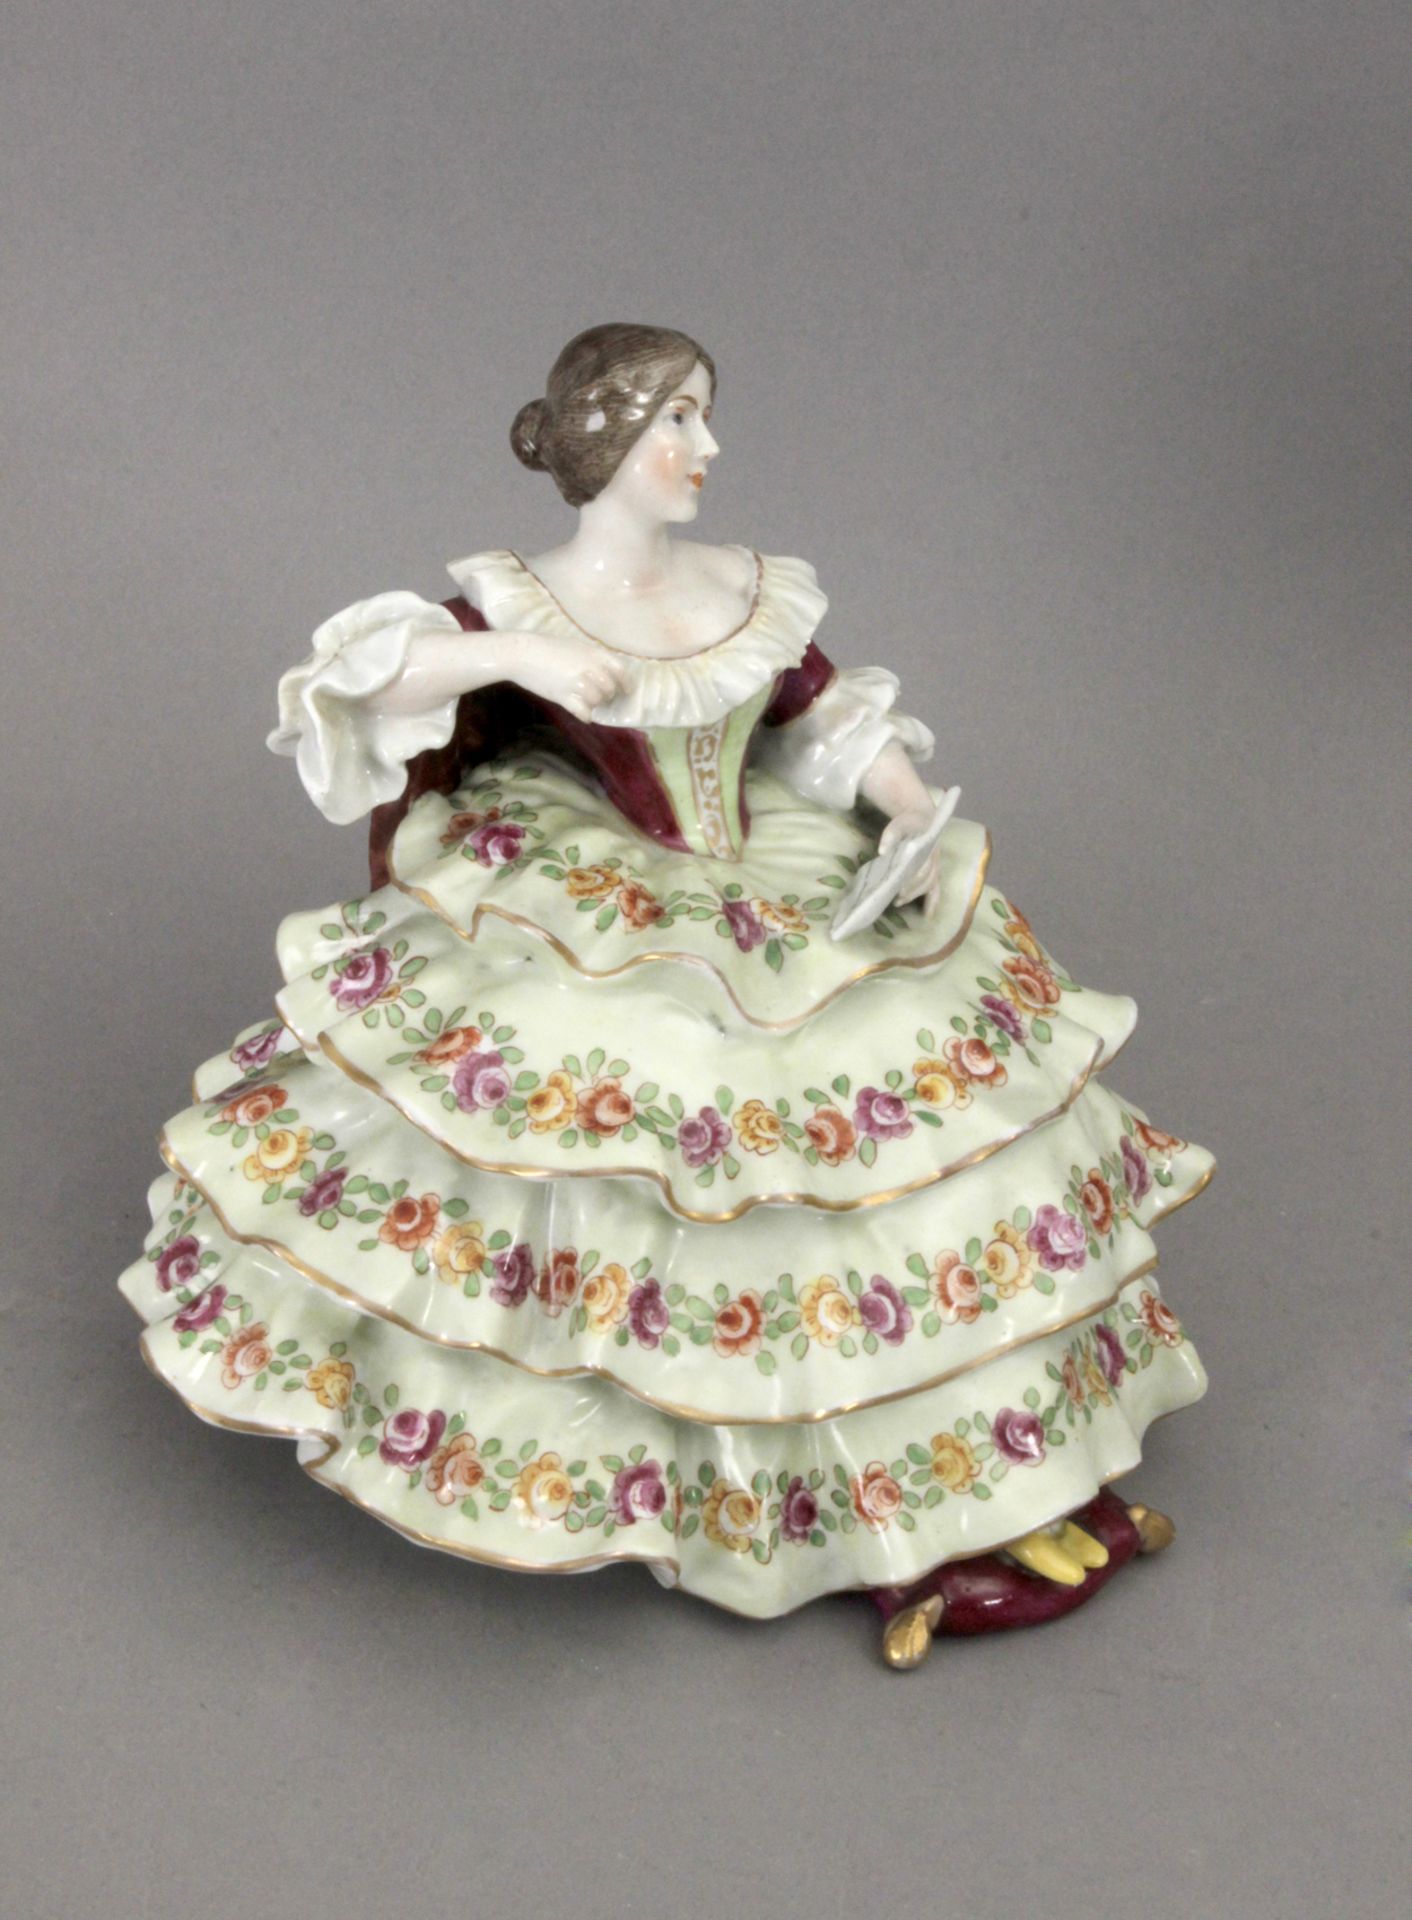 Early 20th century dame figure in Von Schierholz porcelain